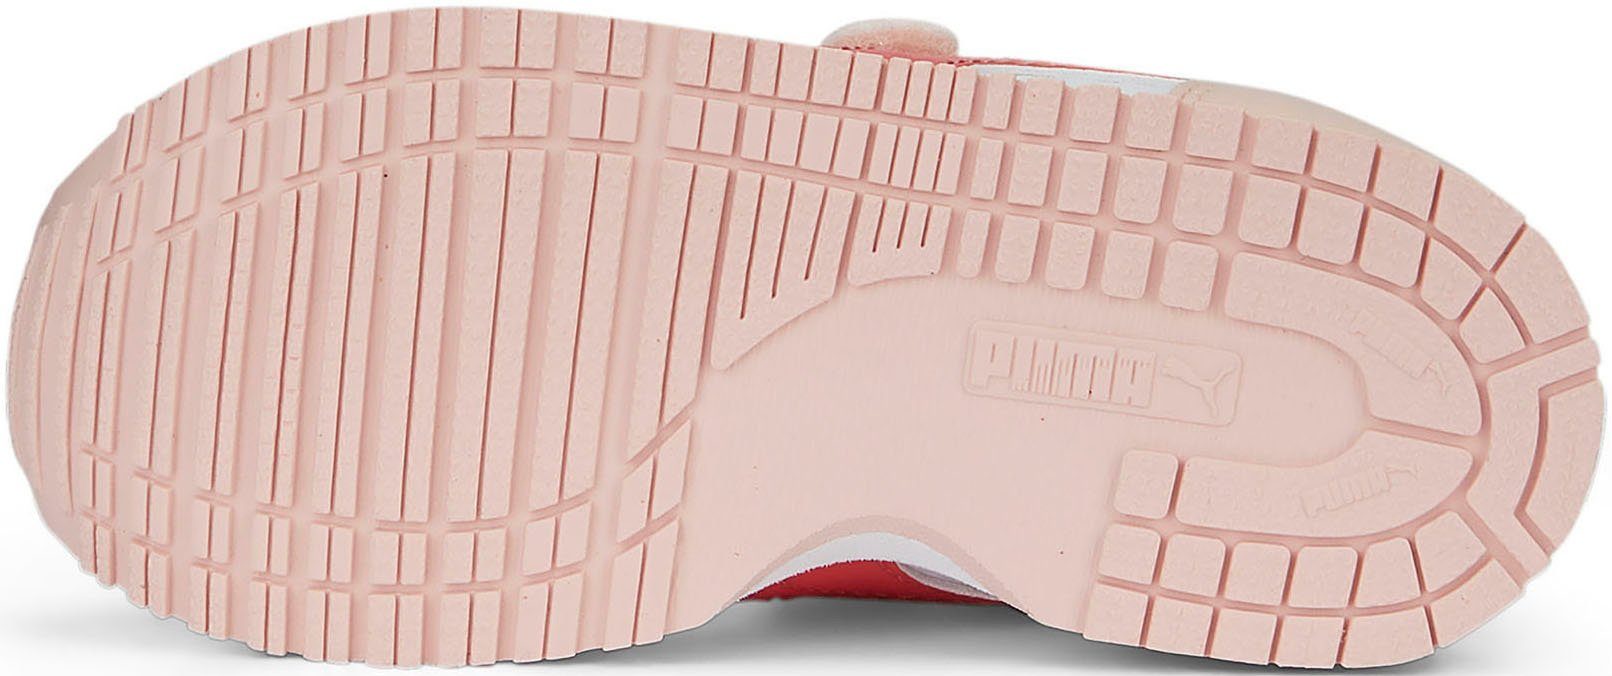 PUMA CABANA Klettverschluss INF rosa 20 SL Sneaker RACER V mit